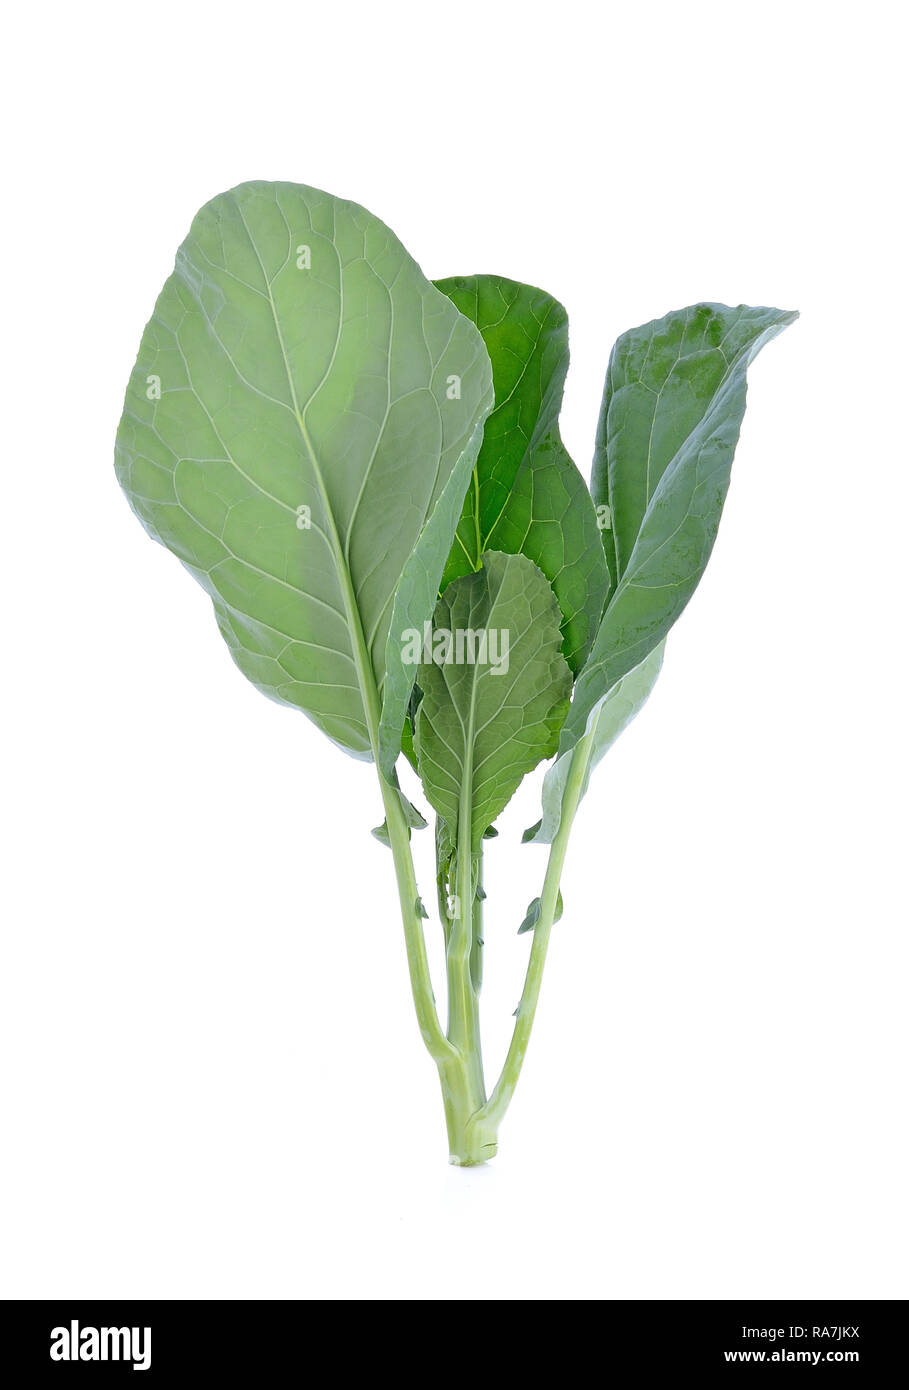 Chinese Broccoli Isolated on white background Stock Photo